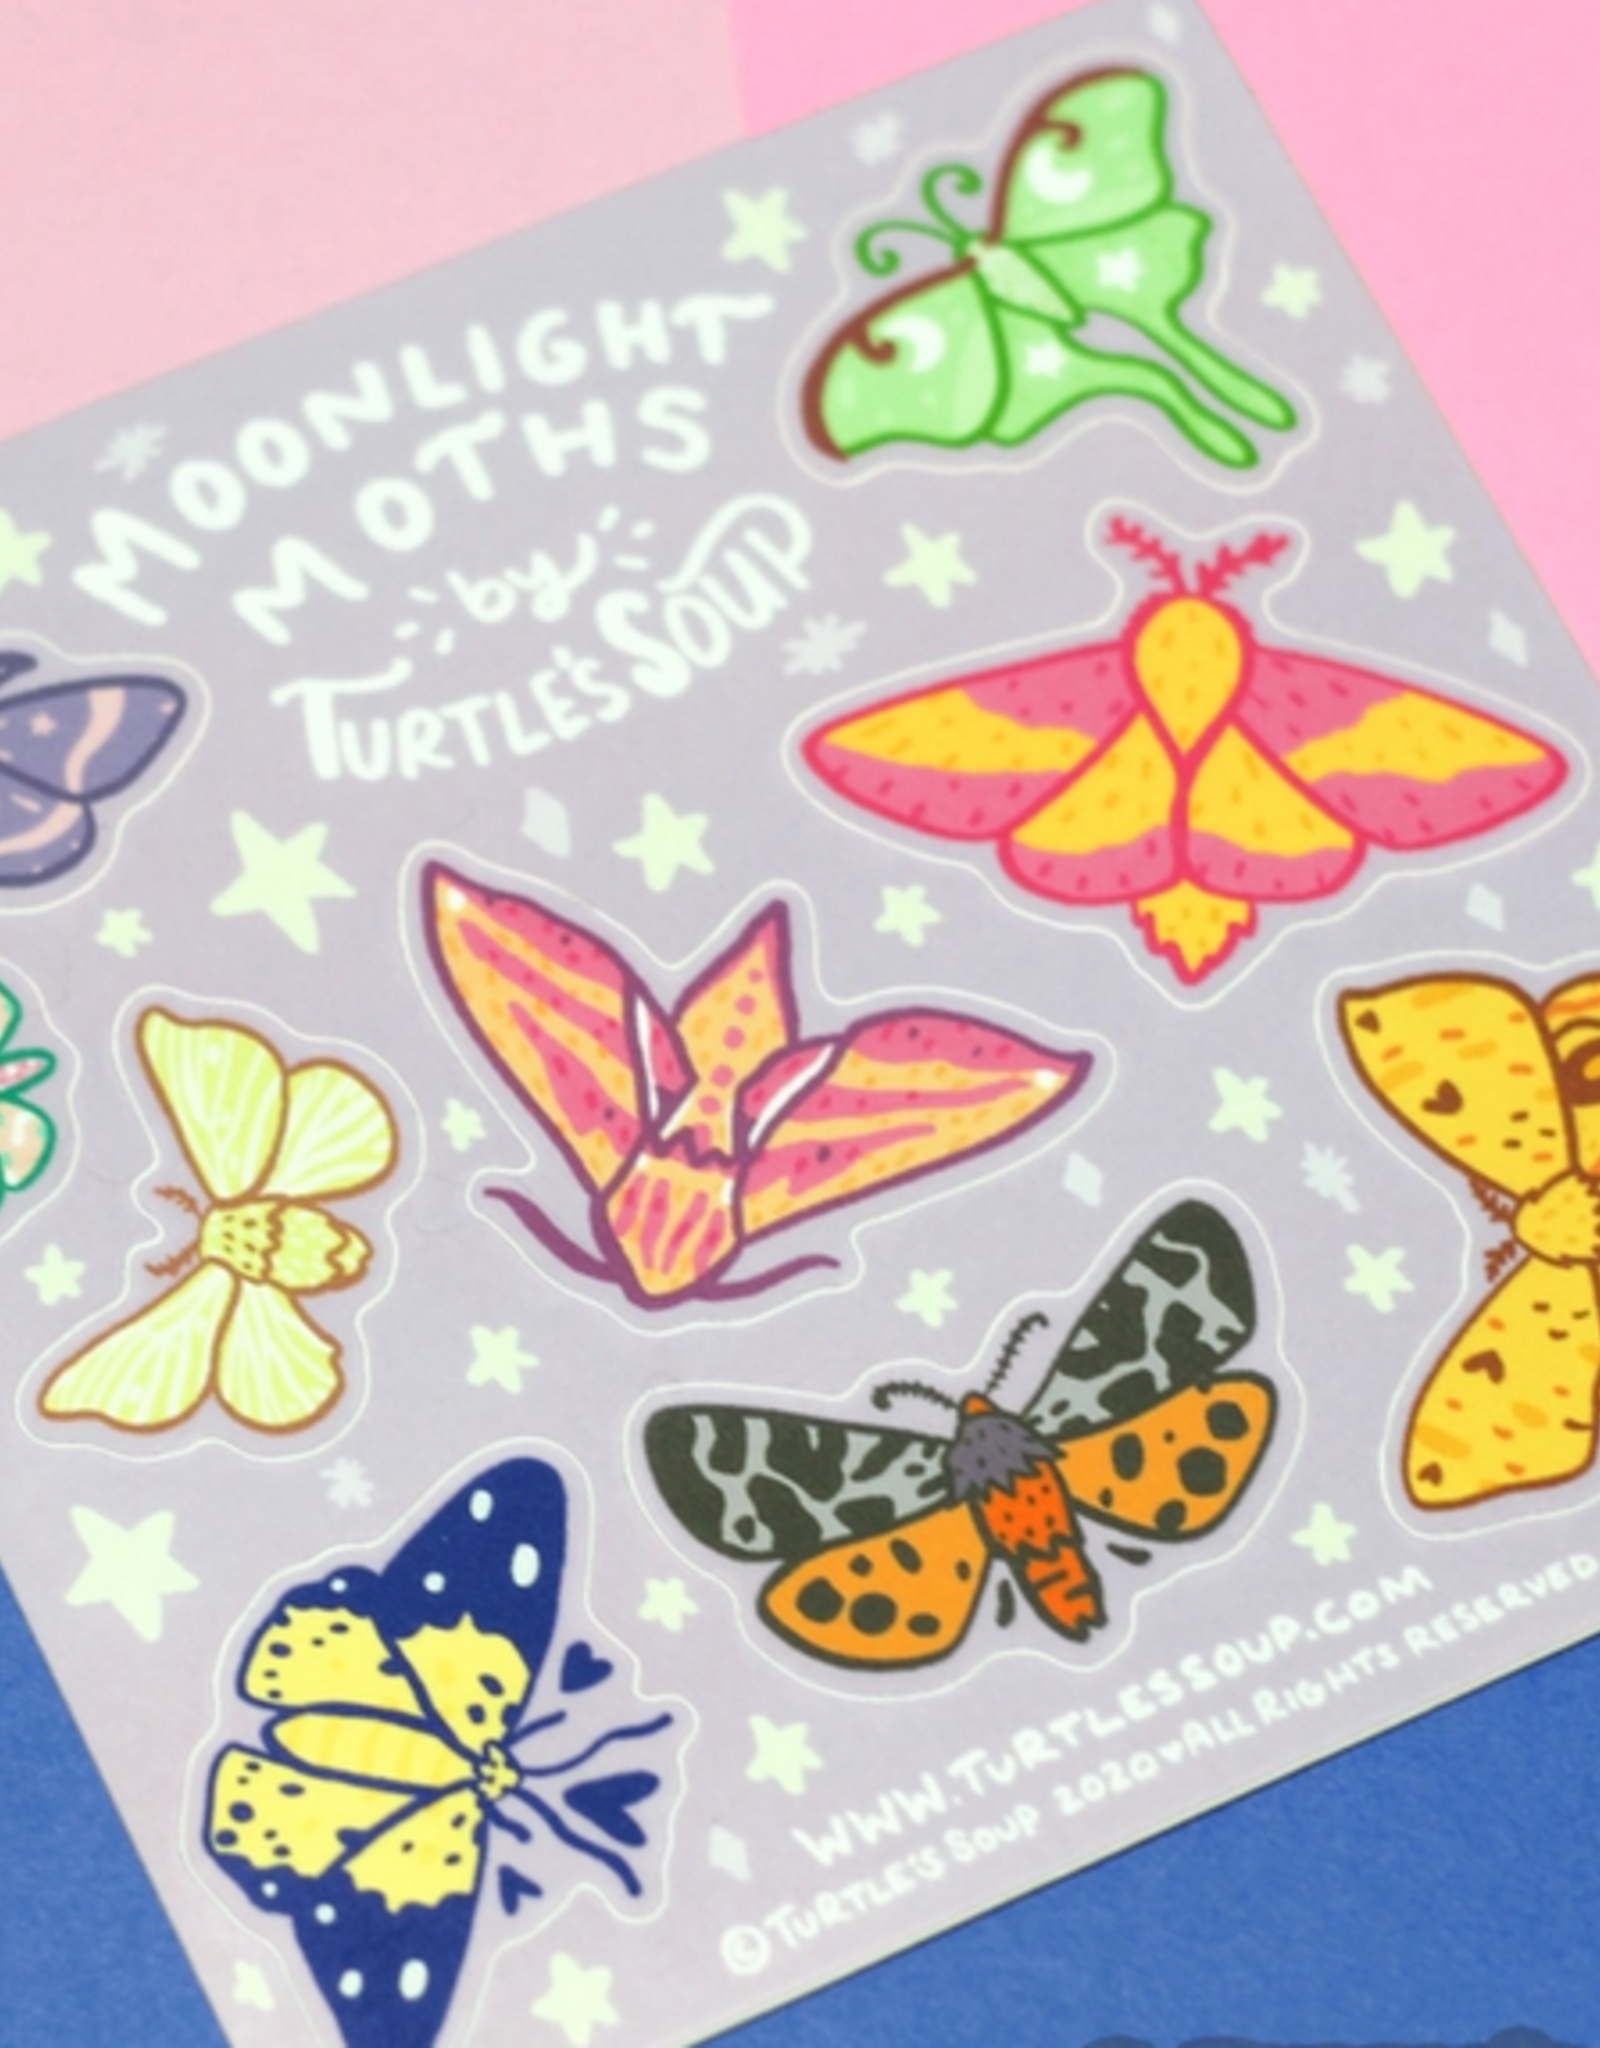 Turtle's Soup Moonlight Moths Vinyl Sticker Sheet